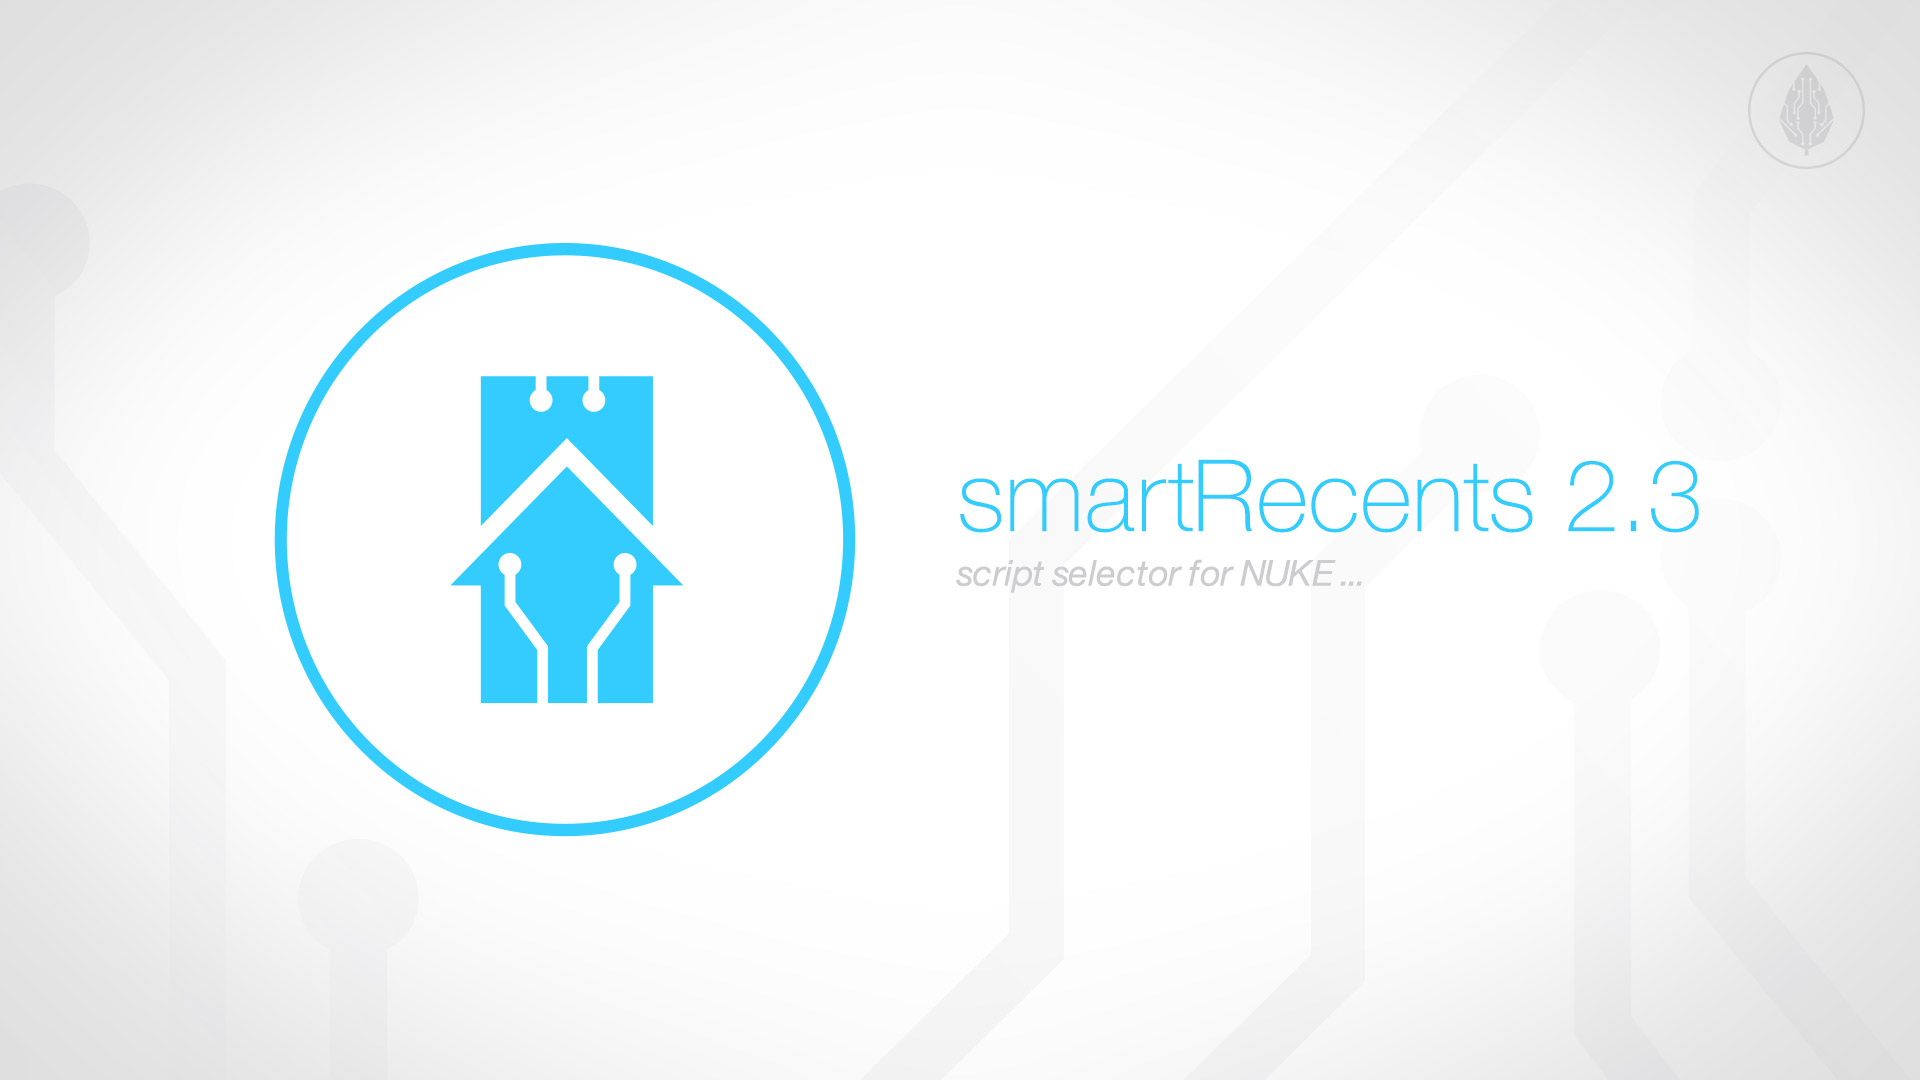 smartRecents 2.3